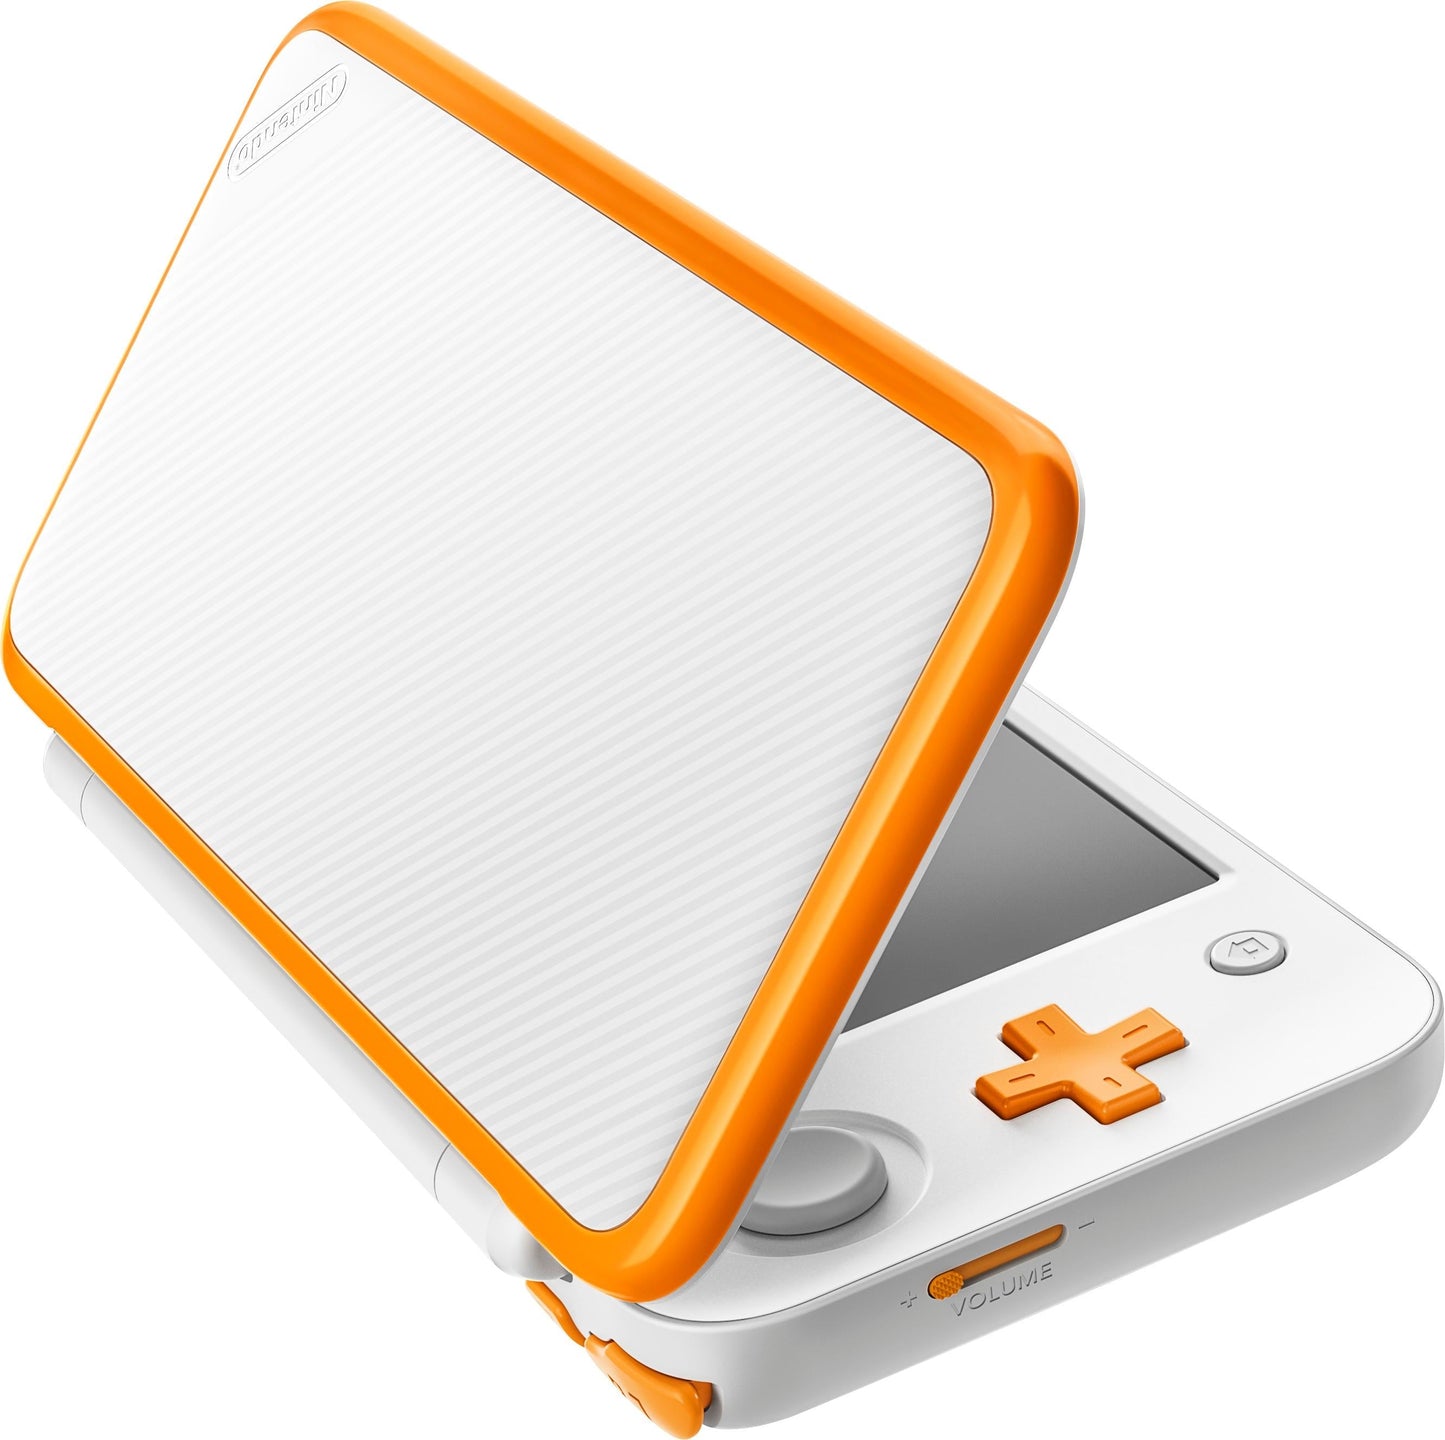 New Nintendo 2DS XL - White/Orange